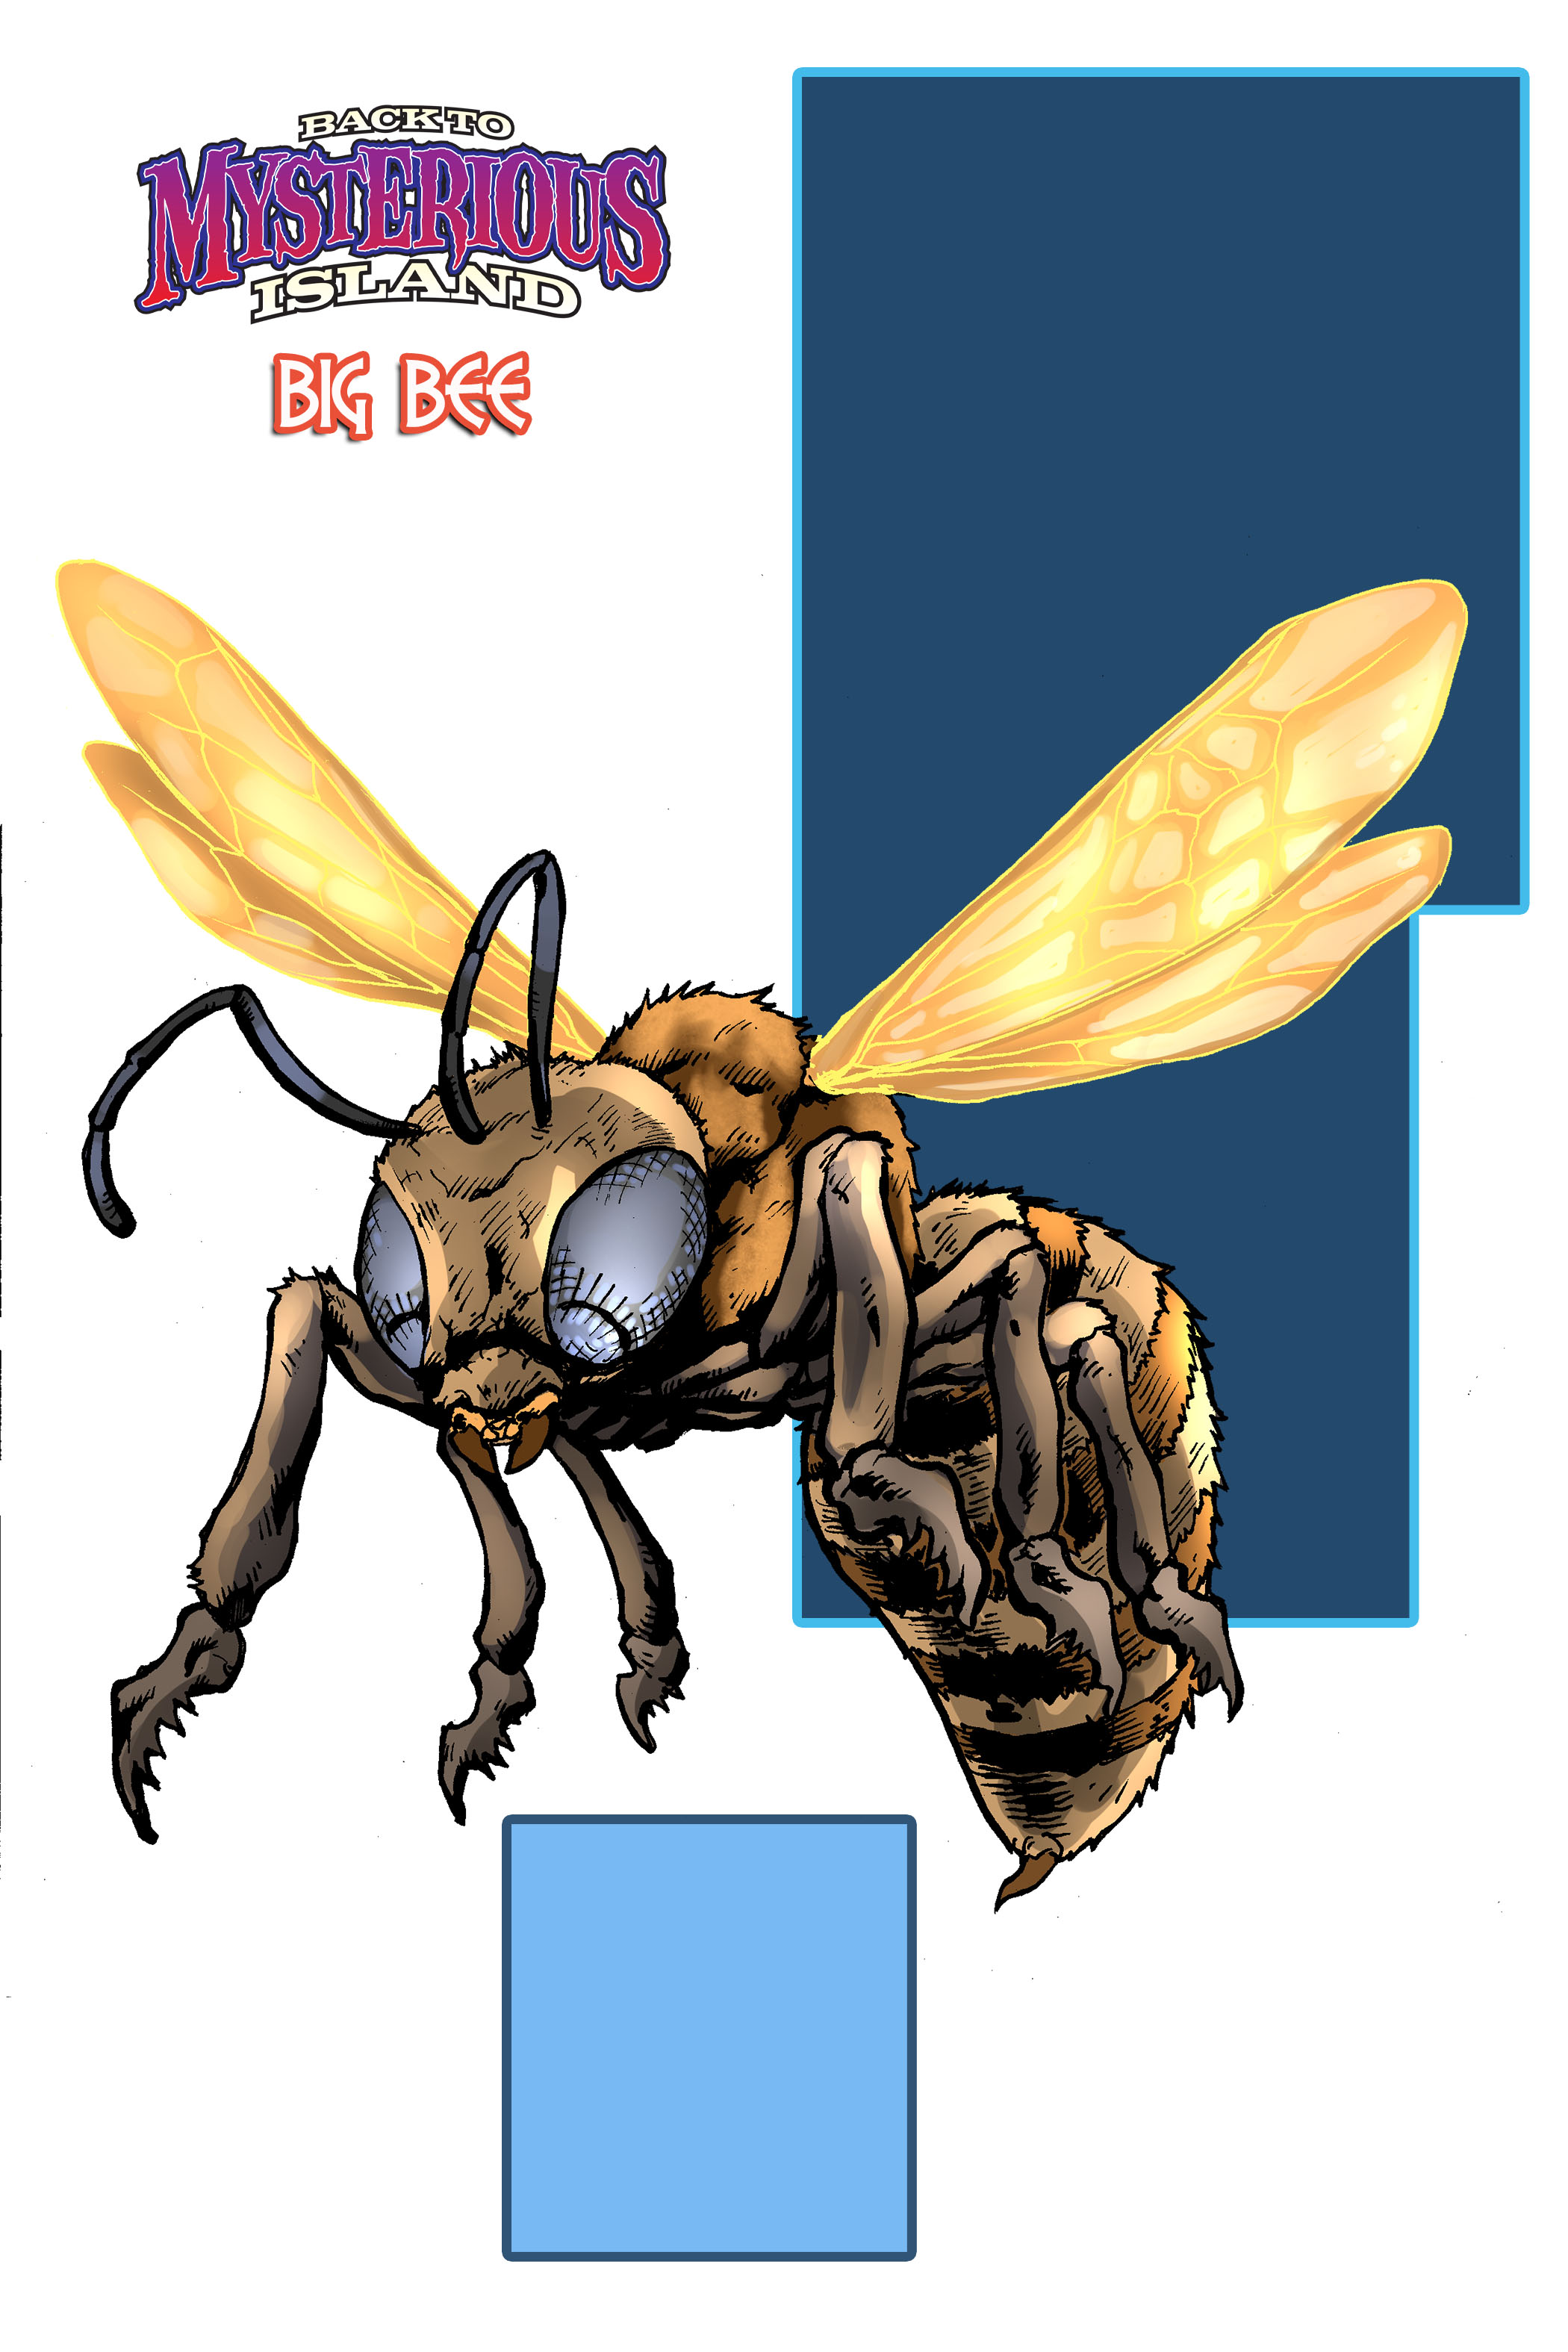 TidalWave: Big Bee